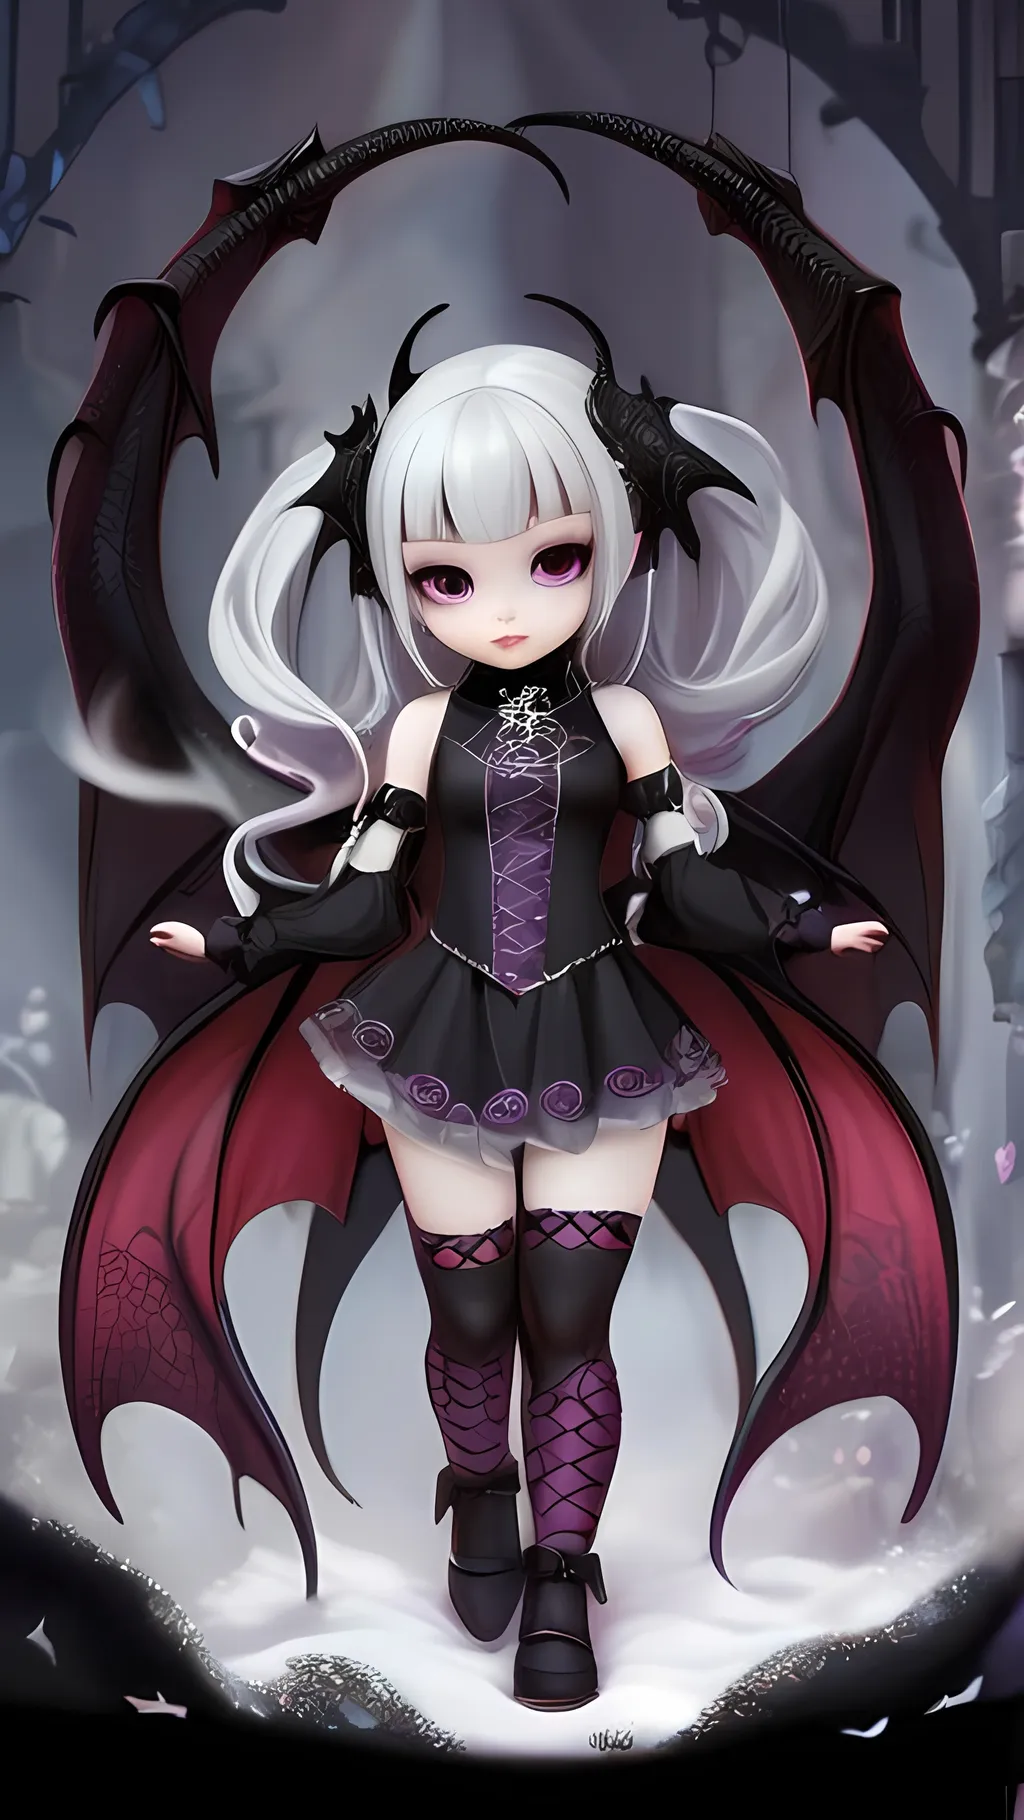 Prompt: Gothic, mystic backdrop, dragon girl humanoid, little girl, short dress, curvy legs, popular.